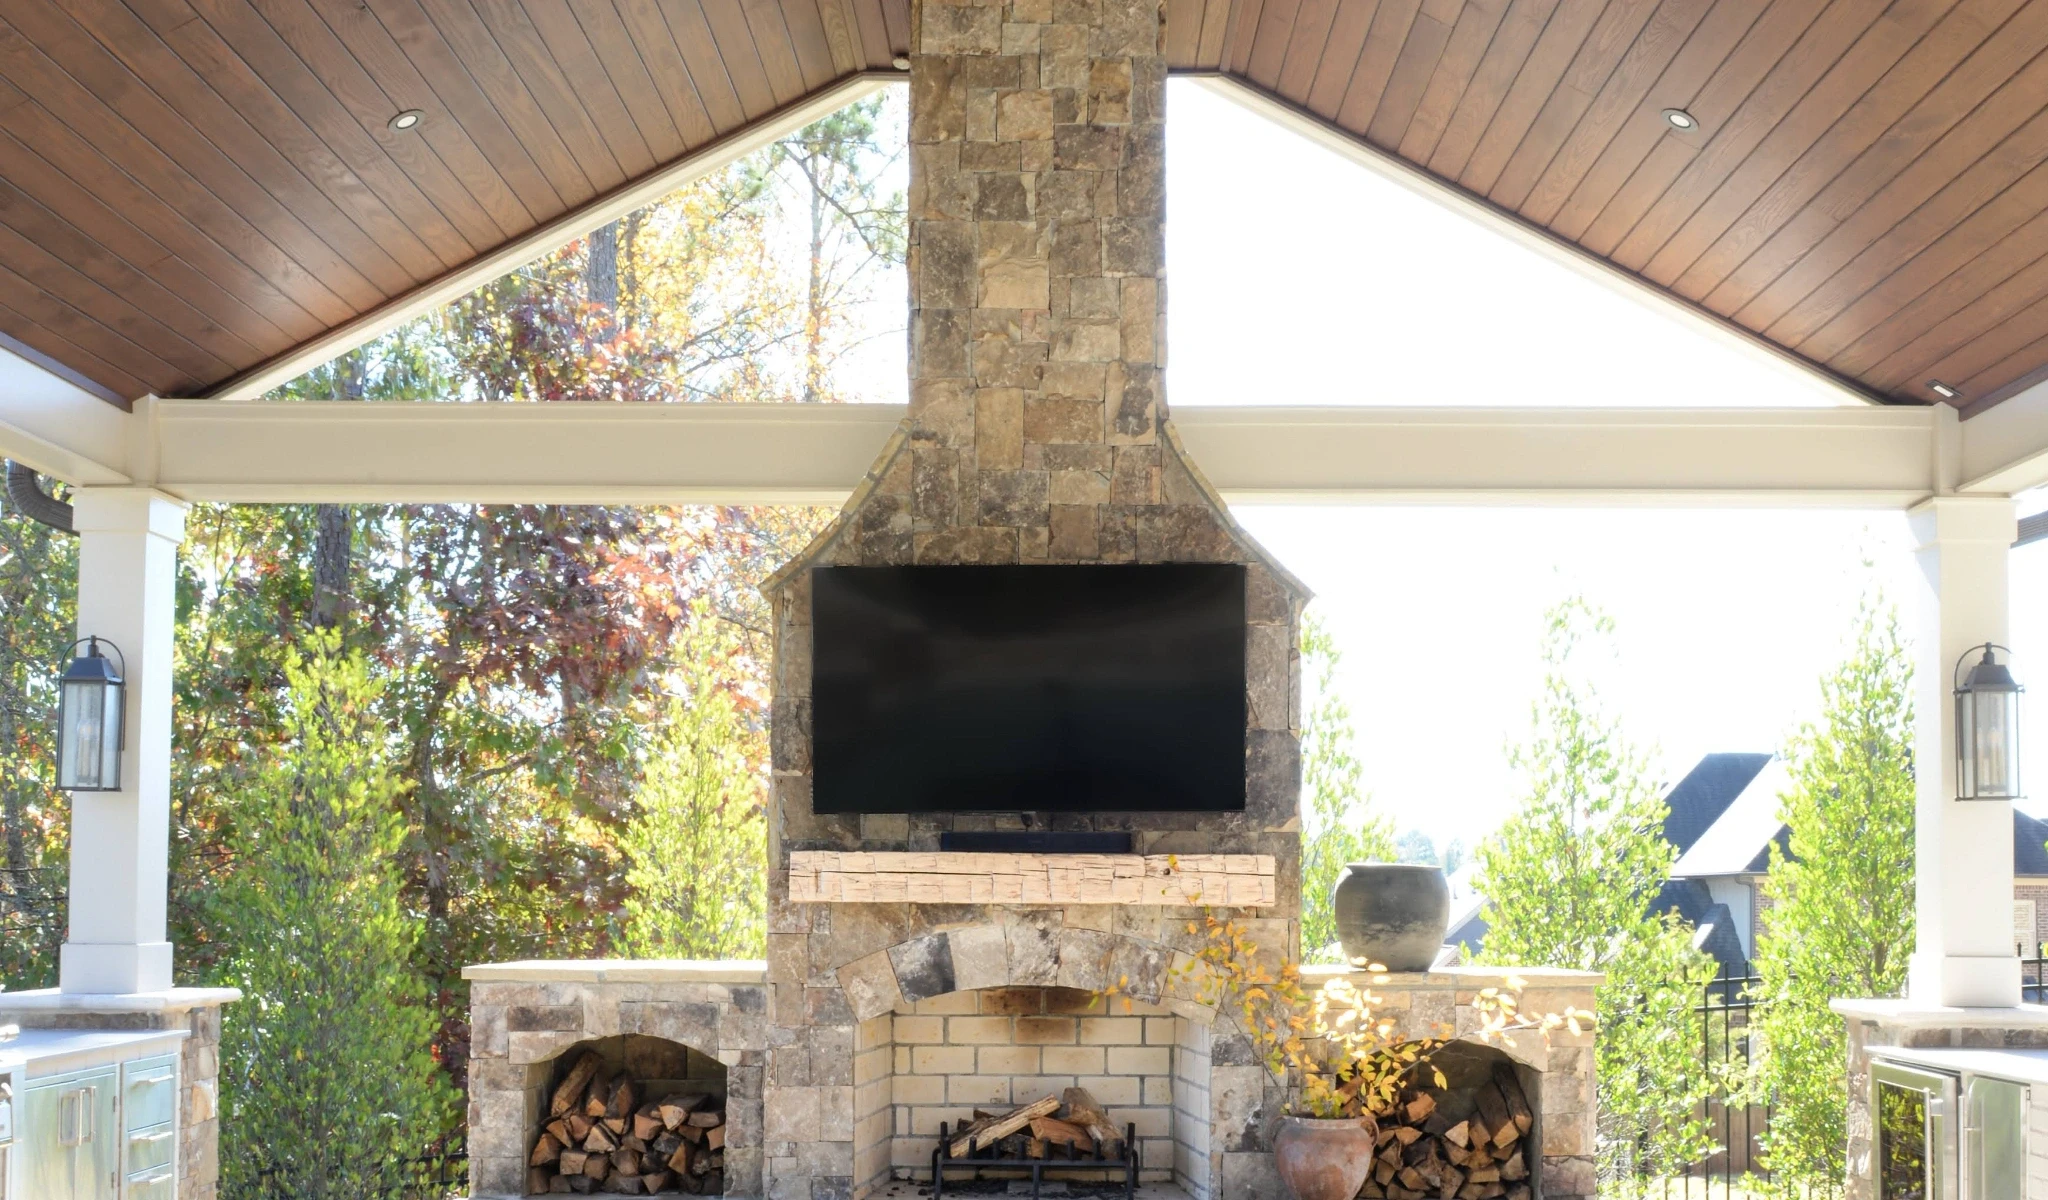 An outdoor fireplace with a flat screen TV.